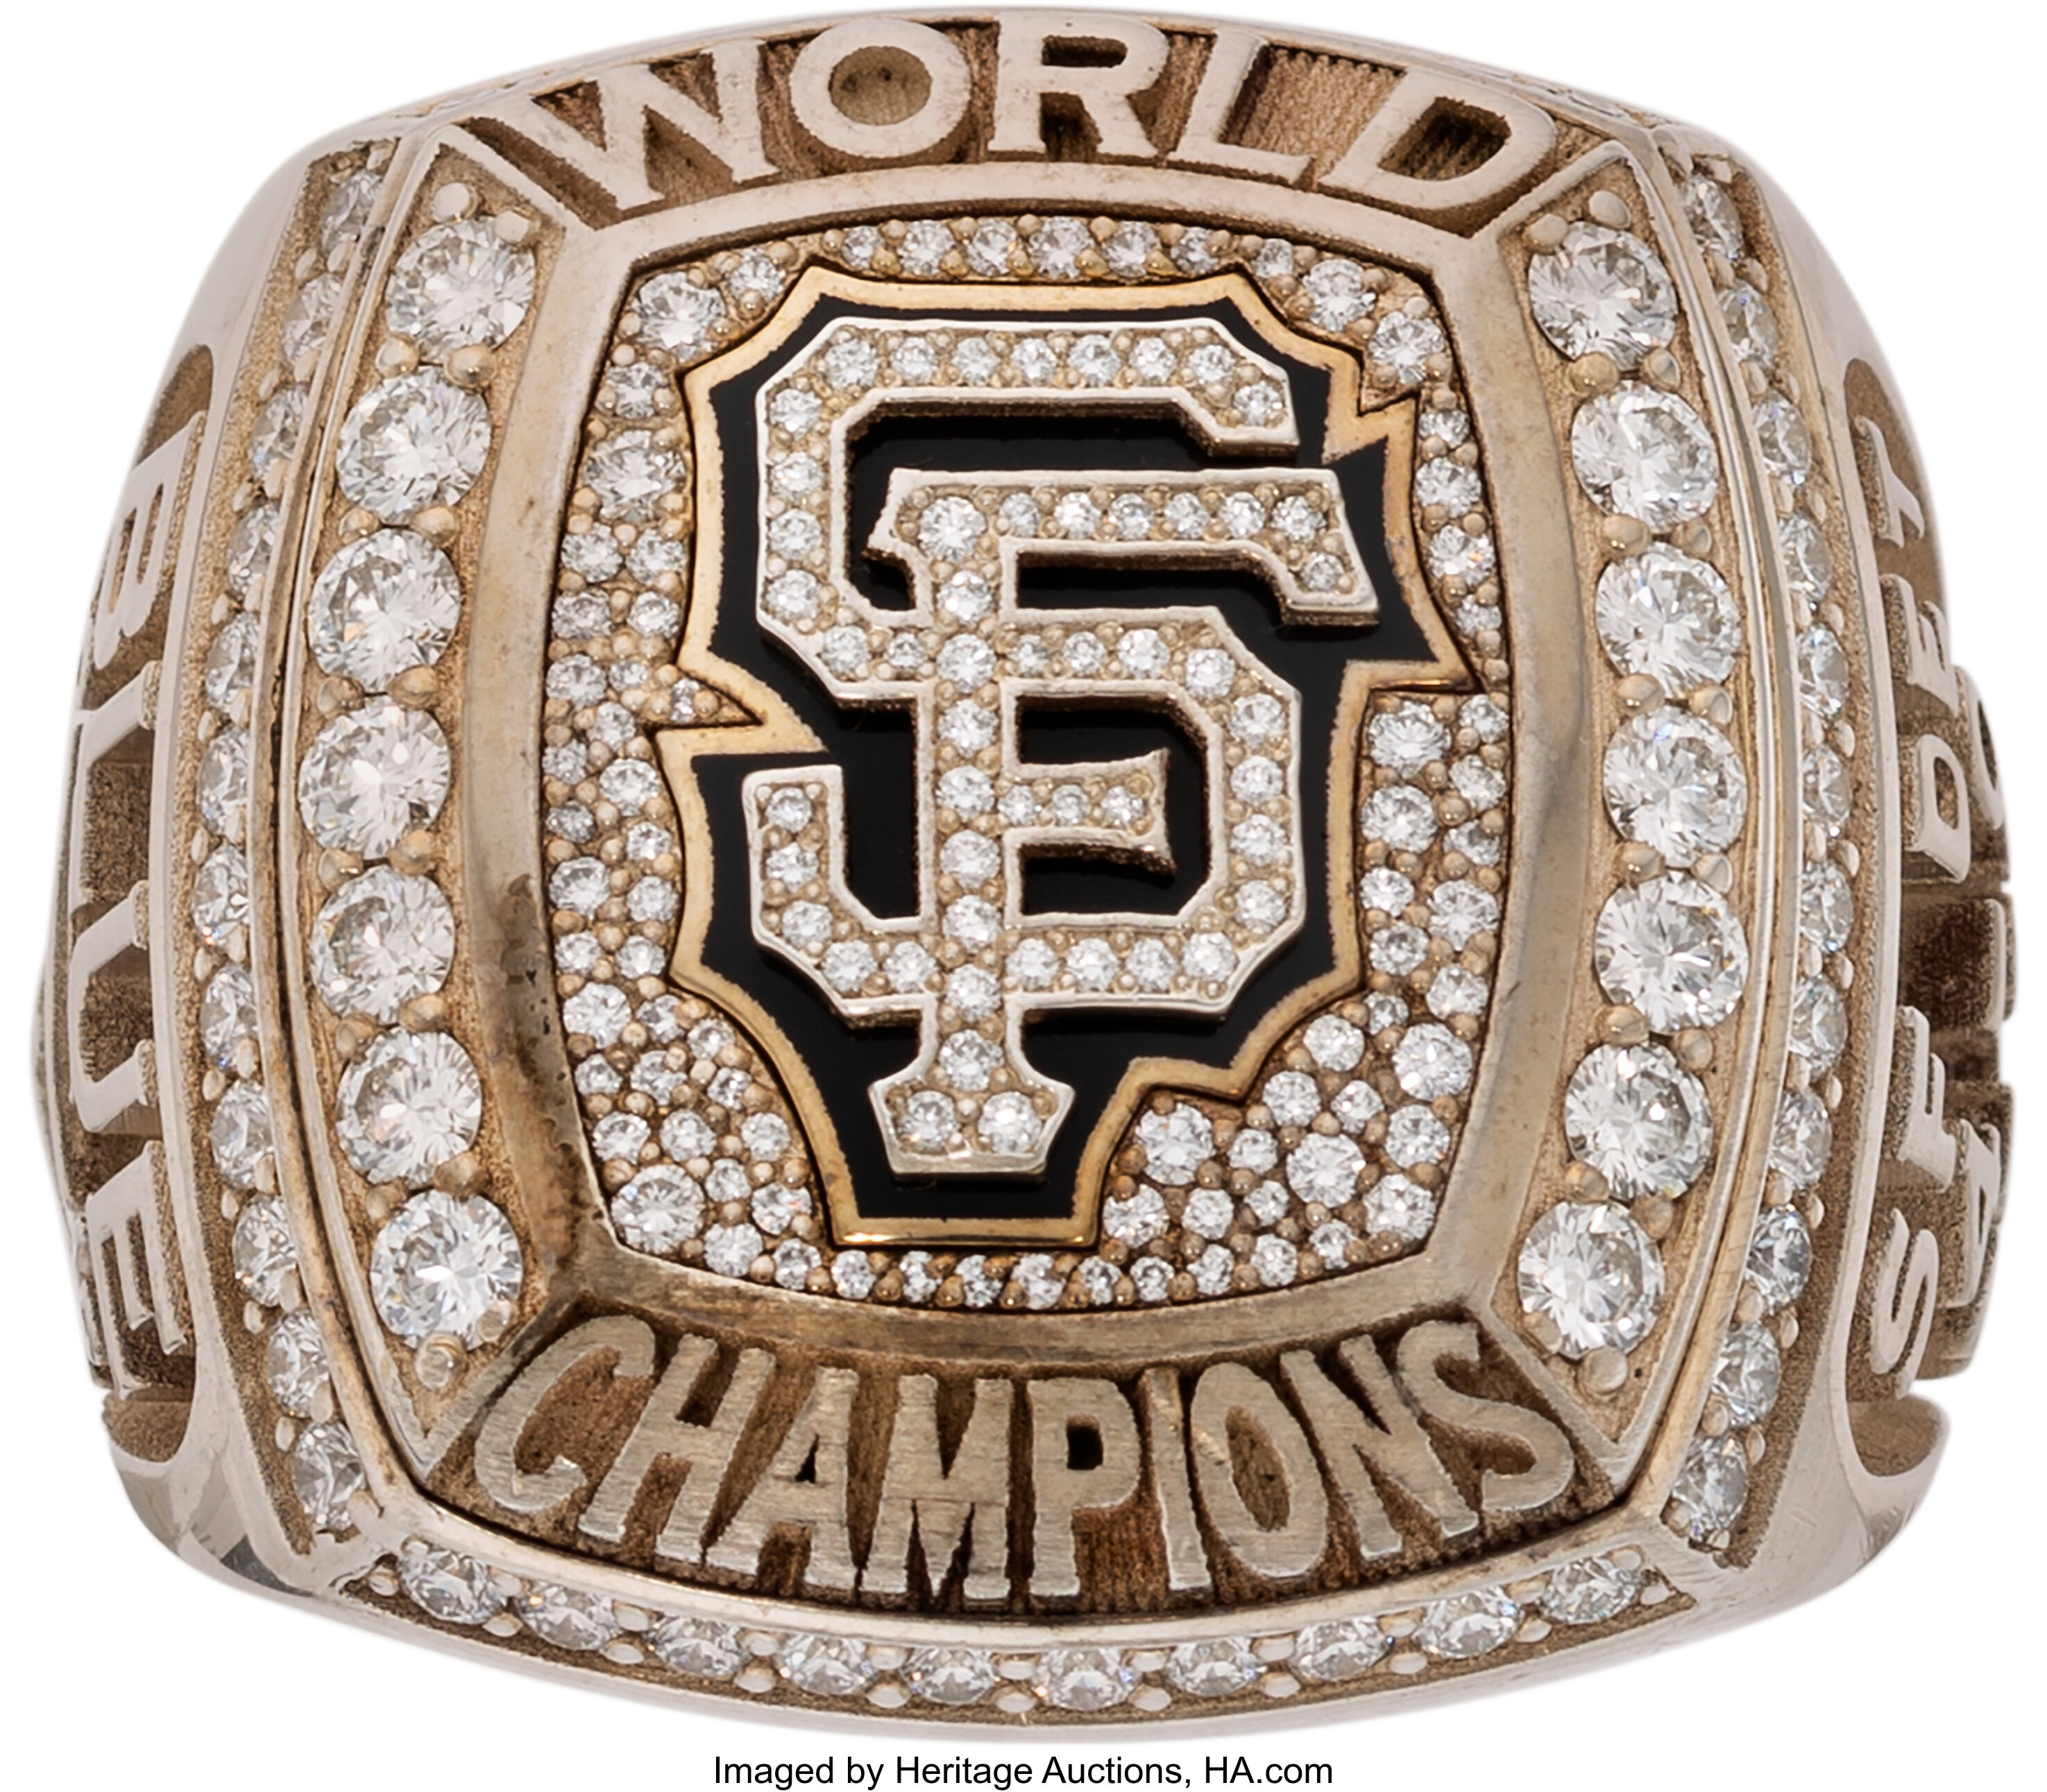 2012 San Francisco Giants World Series Championship Ring Presented